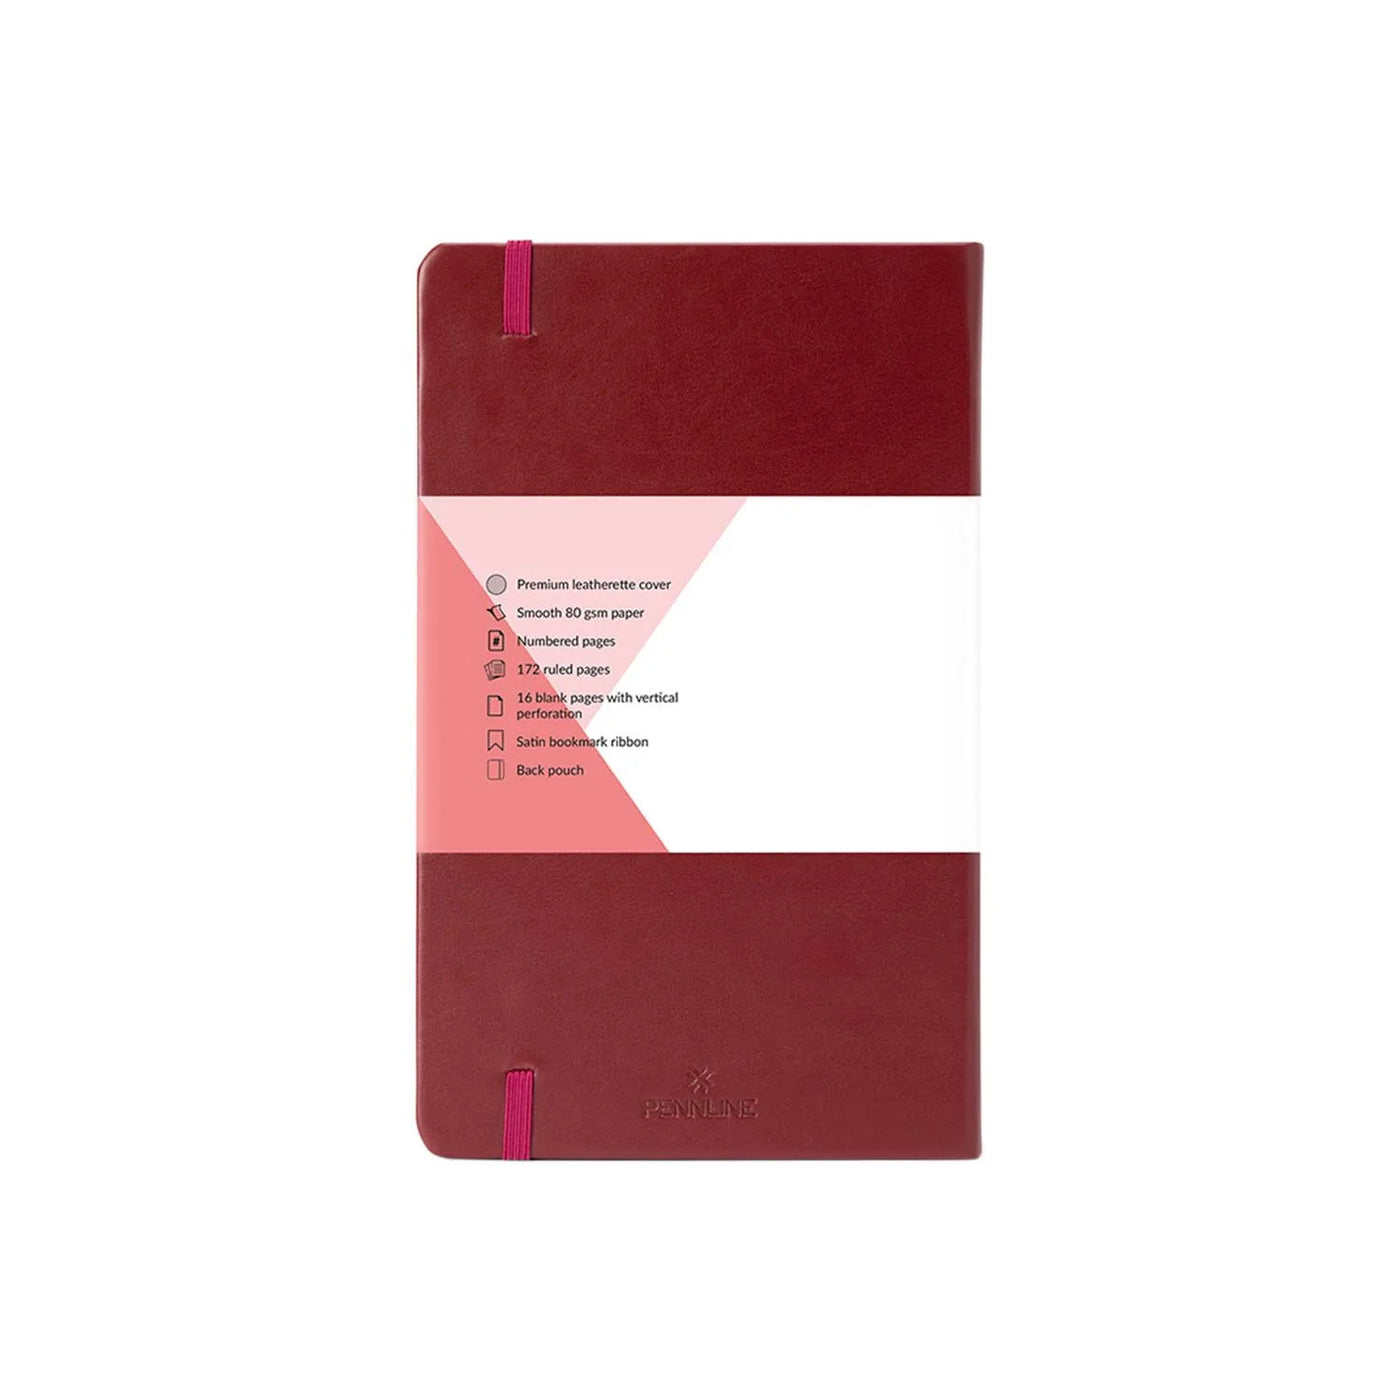 Pennline Waltz Hard Cover Notebook, Marron - Ruled 5